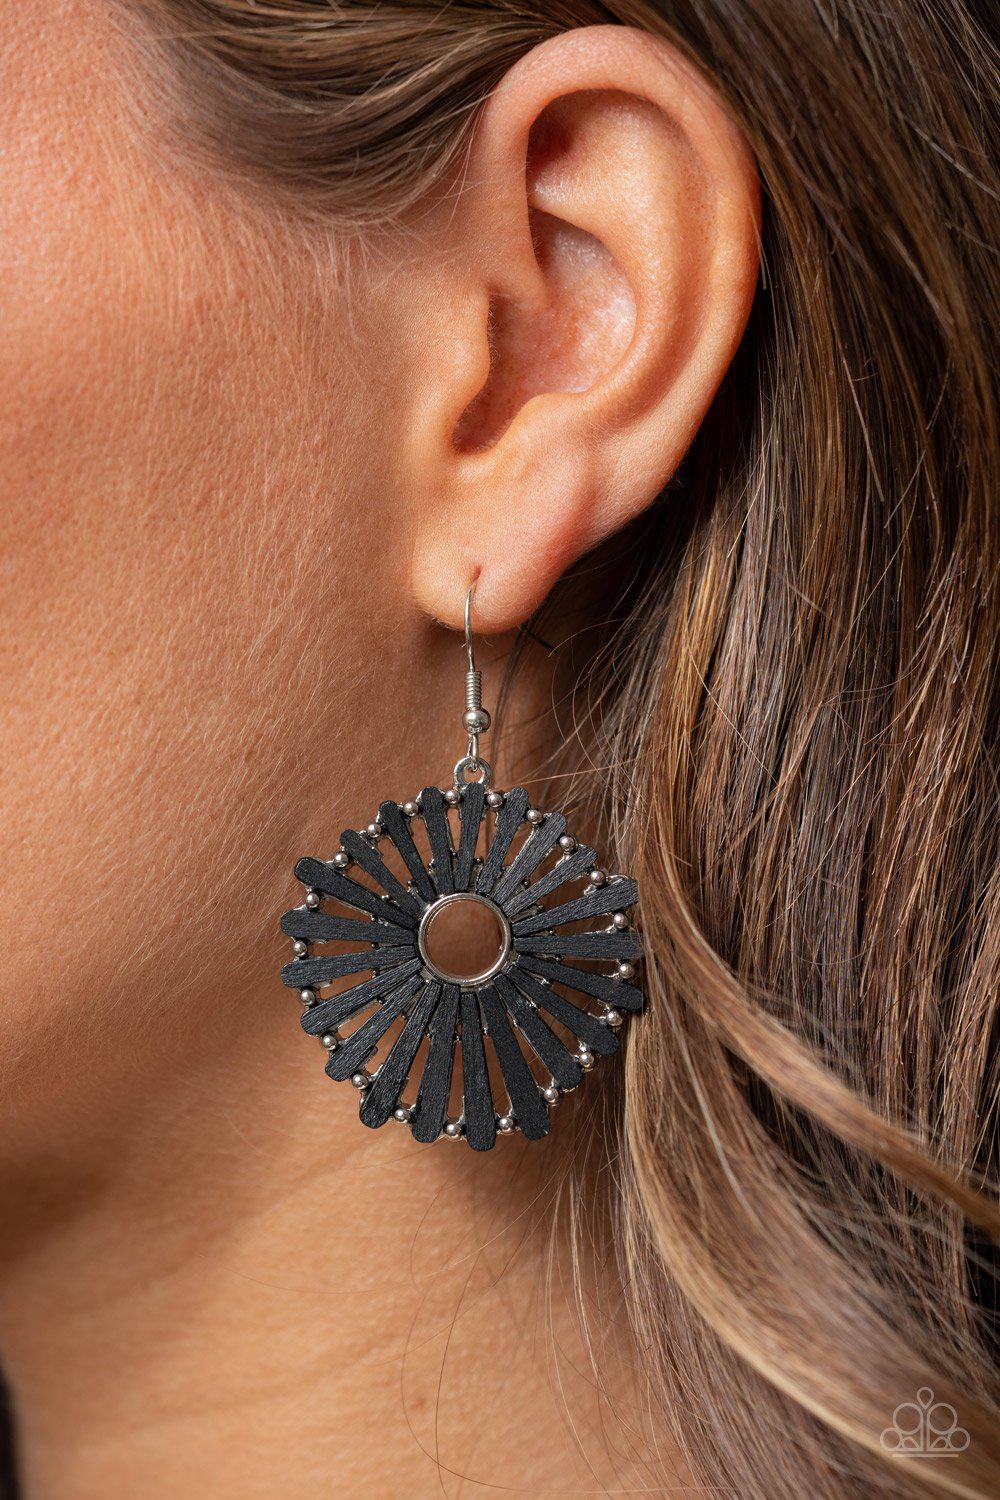 SPOKE Too Soon Black Wood Earrings - Paparazzi Accessories- model - CarasShop.com - $5 Jewelry by Cara Jewels